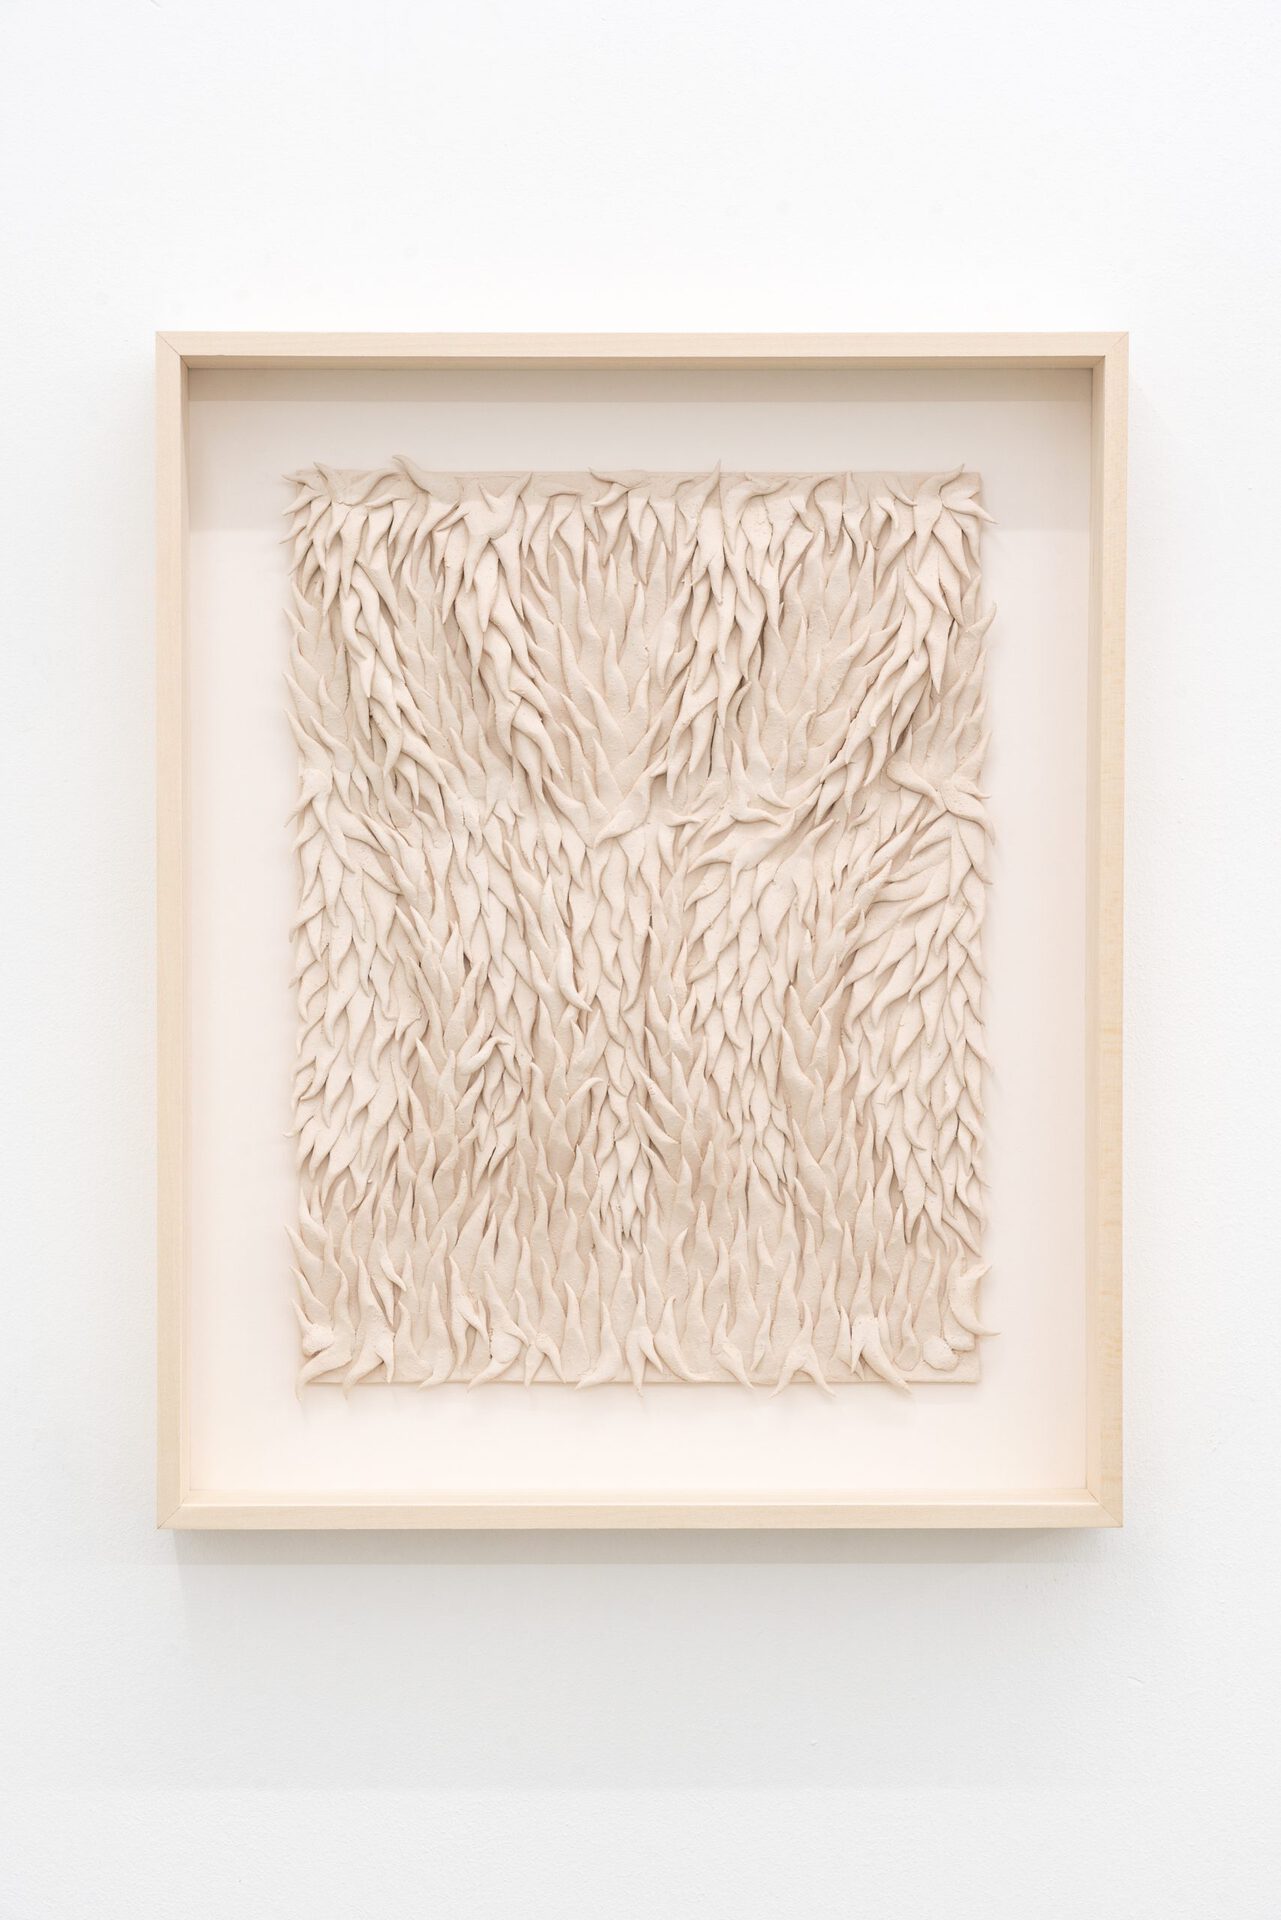 Immanuel Birkert, Untitled, 2021, clay, artist frame, 50 × 40 cm